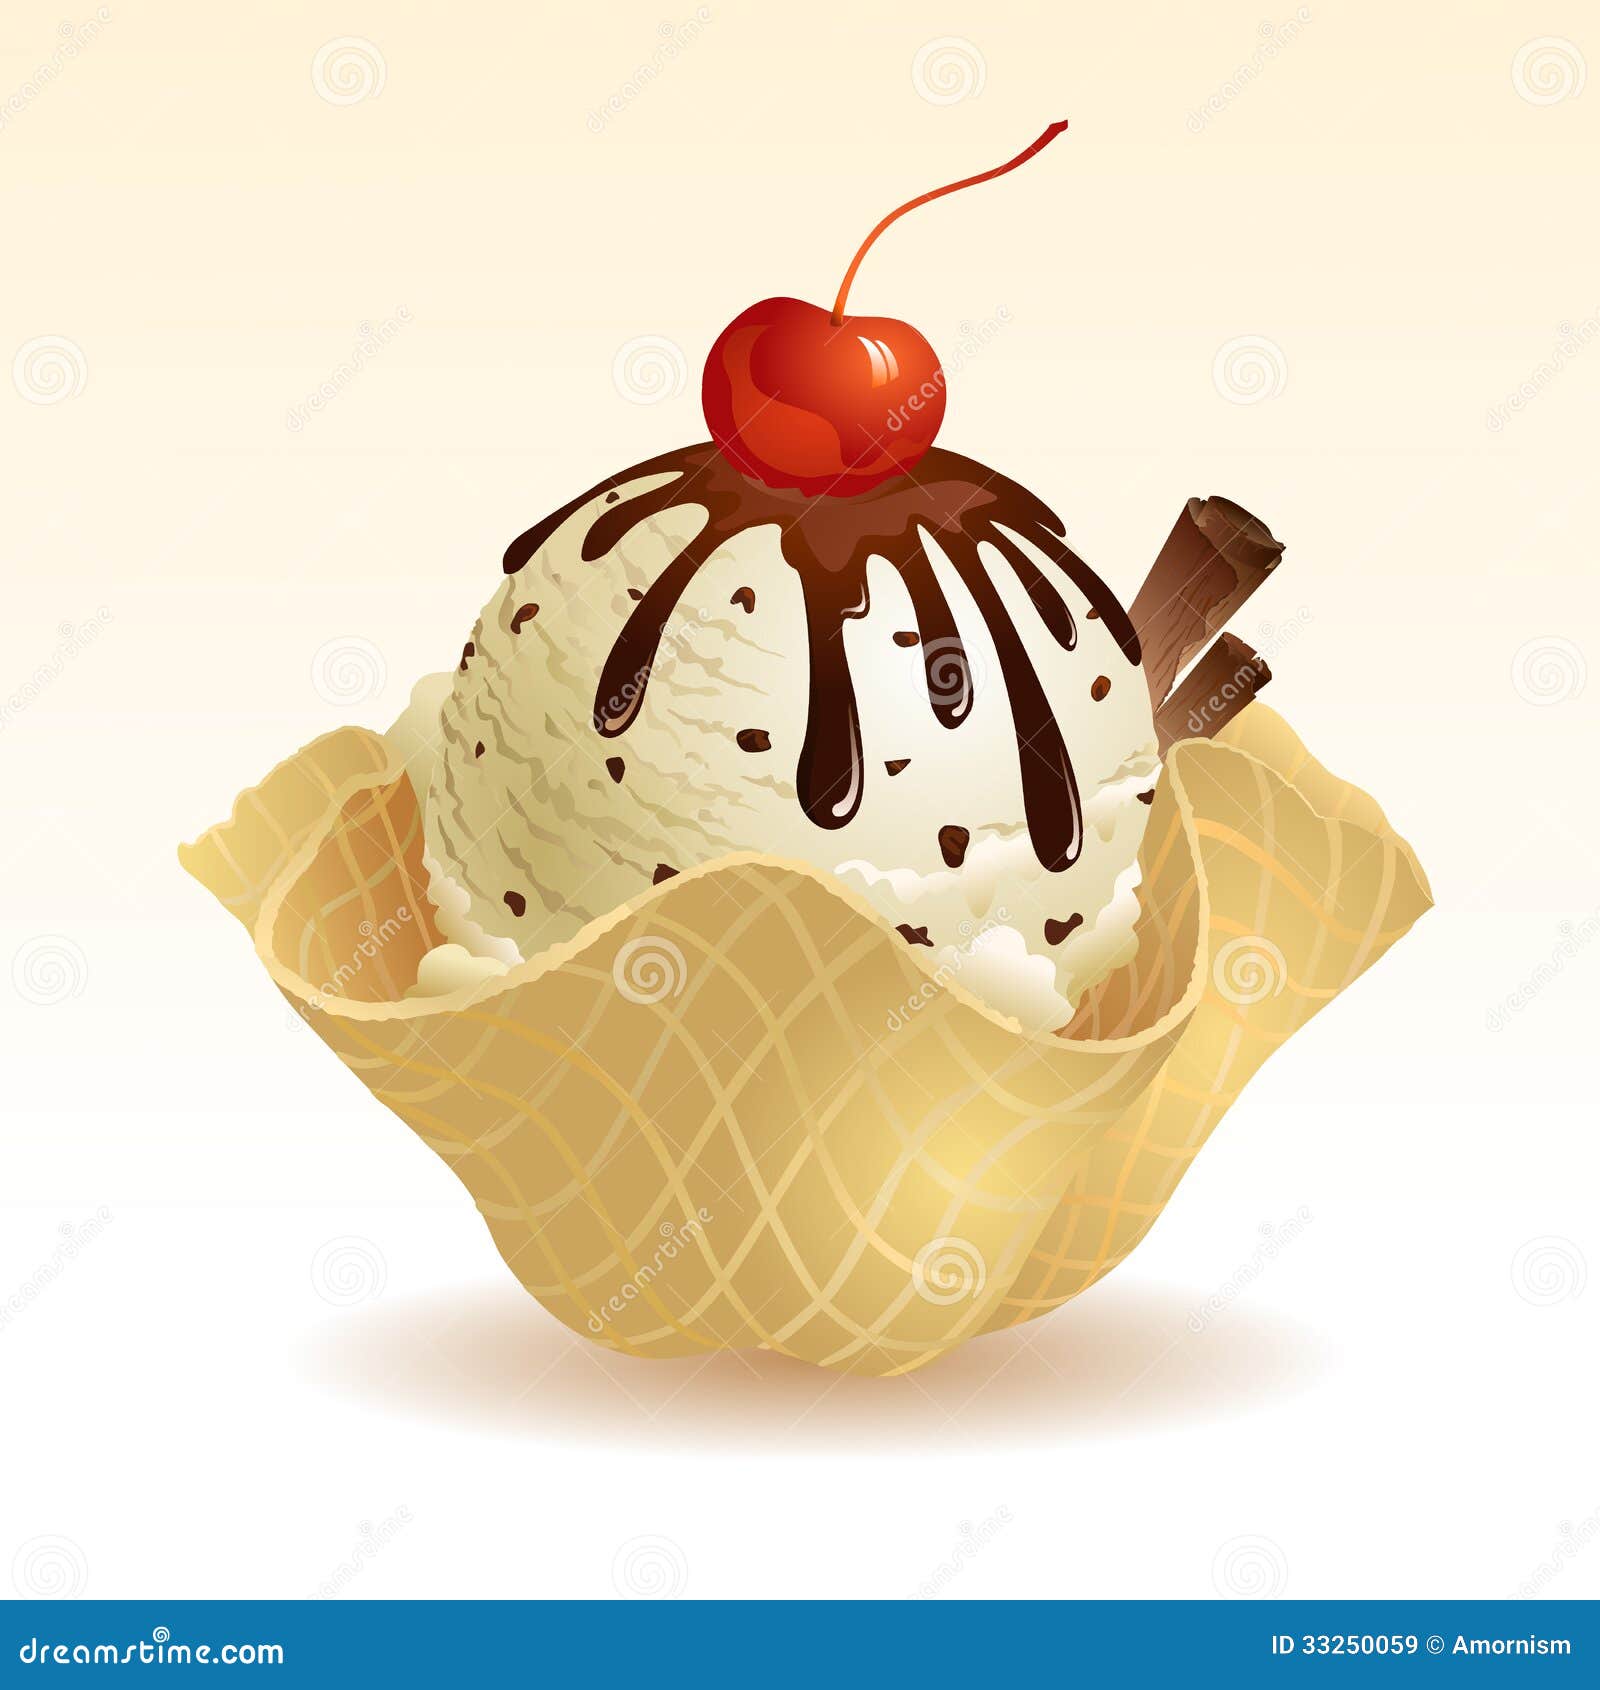 vanilla chocolate chip ice cream with waffle basket